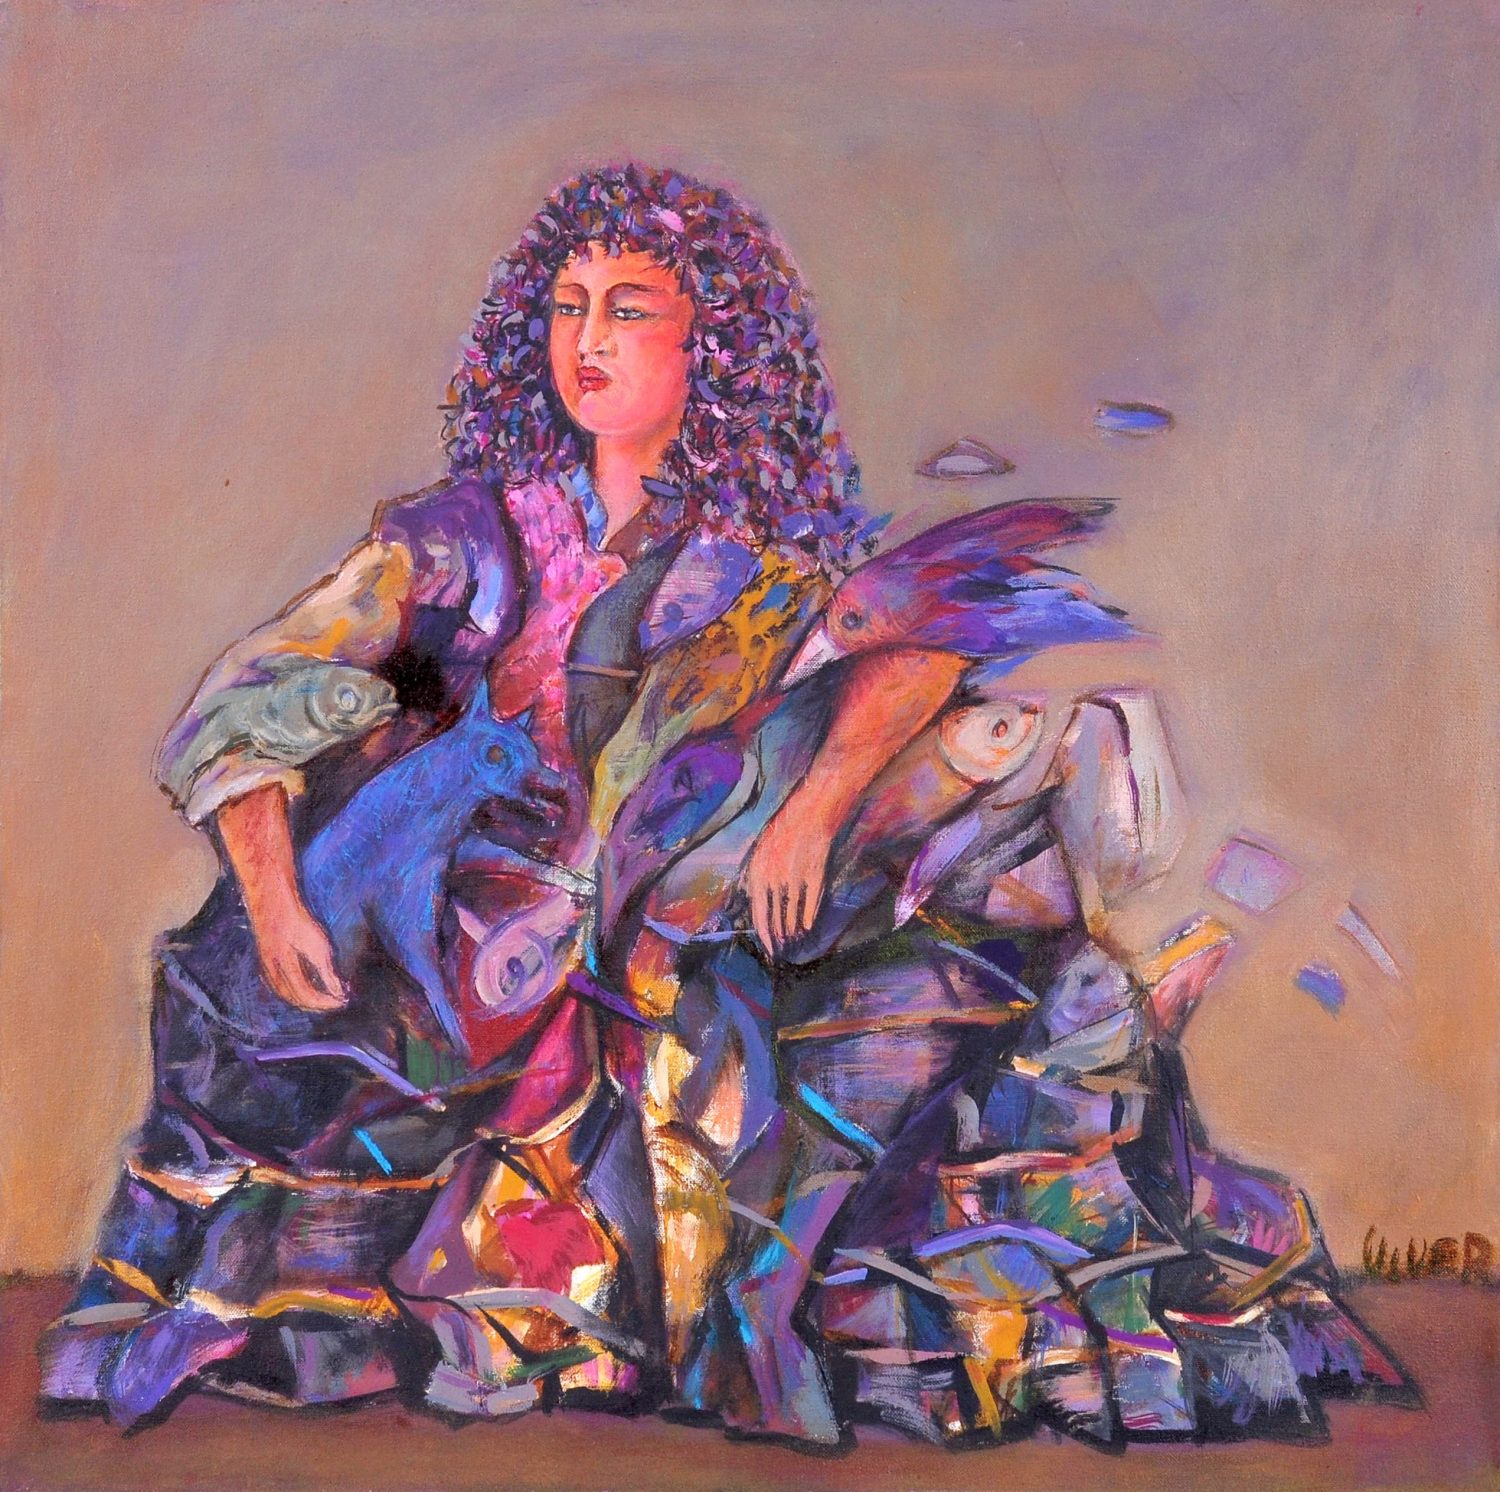 thumbnail of Menina QuiteÃ±a by Ecuadorian artist Carlos Viver. medium: acrylic on canvas. Dimensions: 23.6 x 23.6 inches. date: 1968